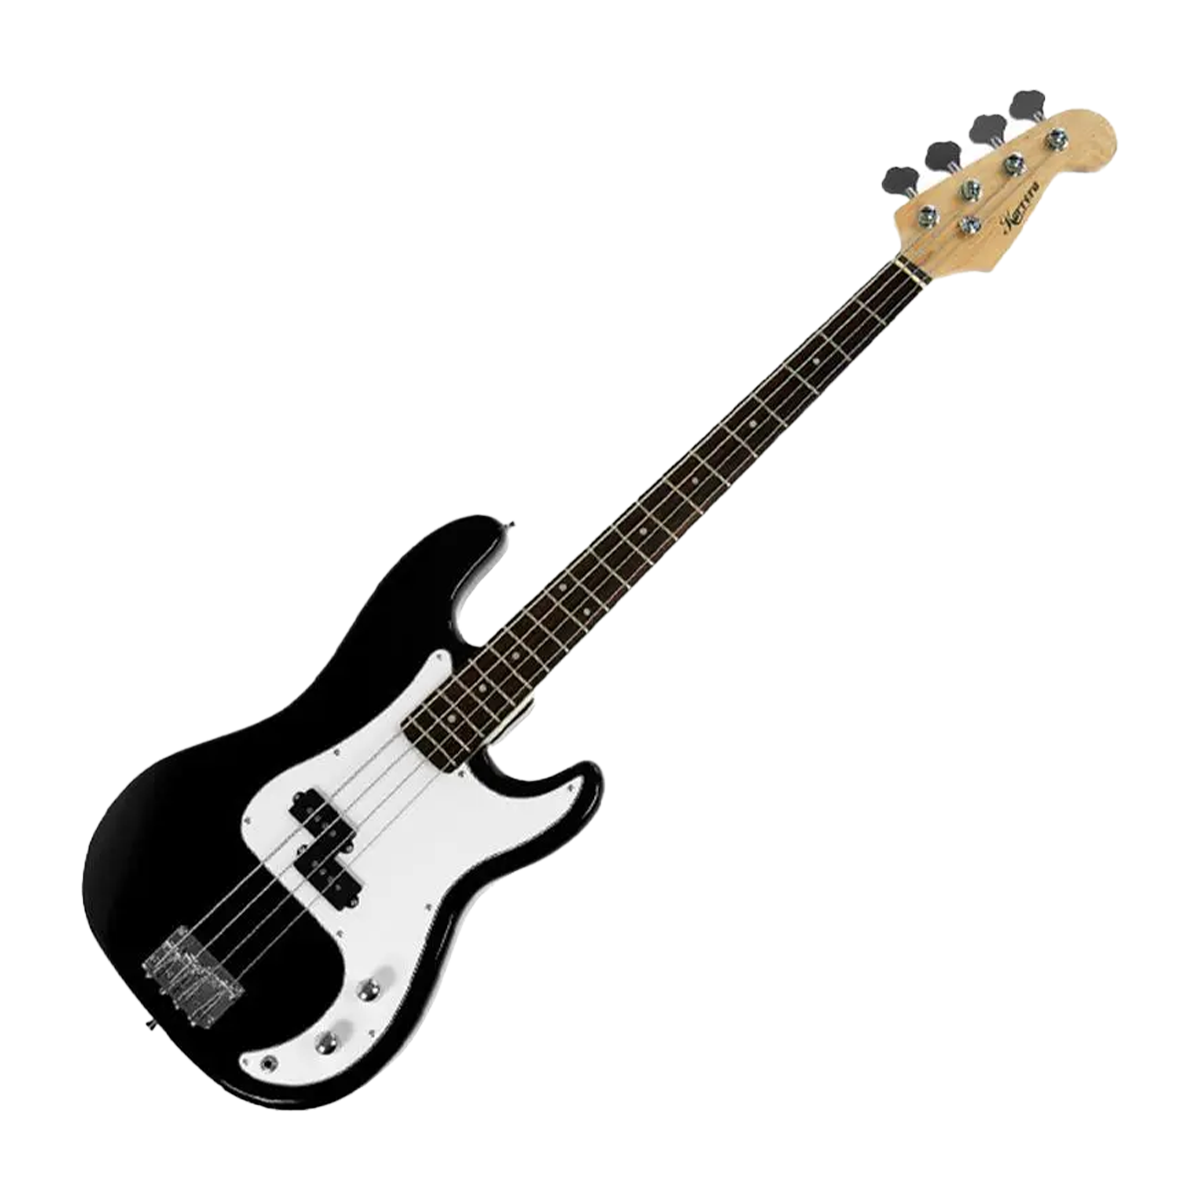 Karrera Electric Bass Guitar - Black 1